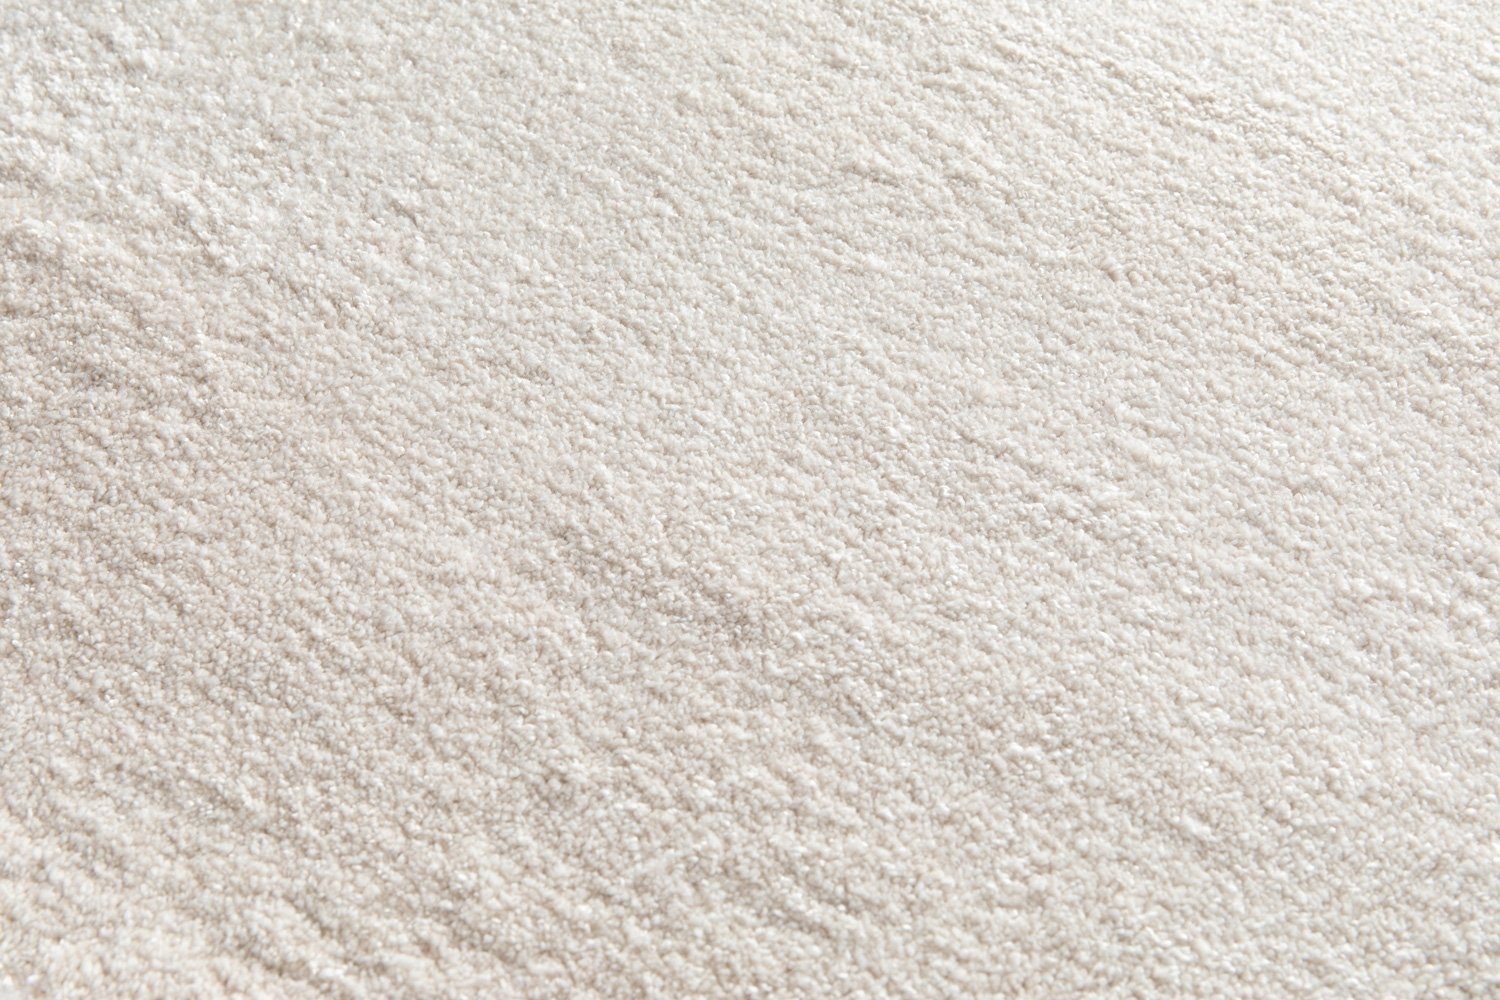 Teppich FAST, Polypropylen, Creme, Rugs, 80 150 mm Unifarben, 17 x Balta cm, Höhe: rechteckig